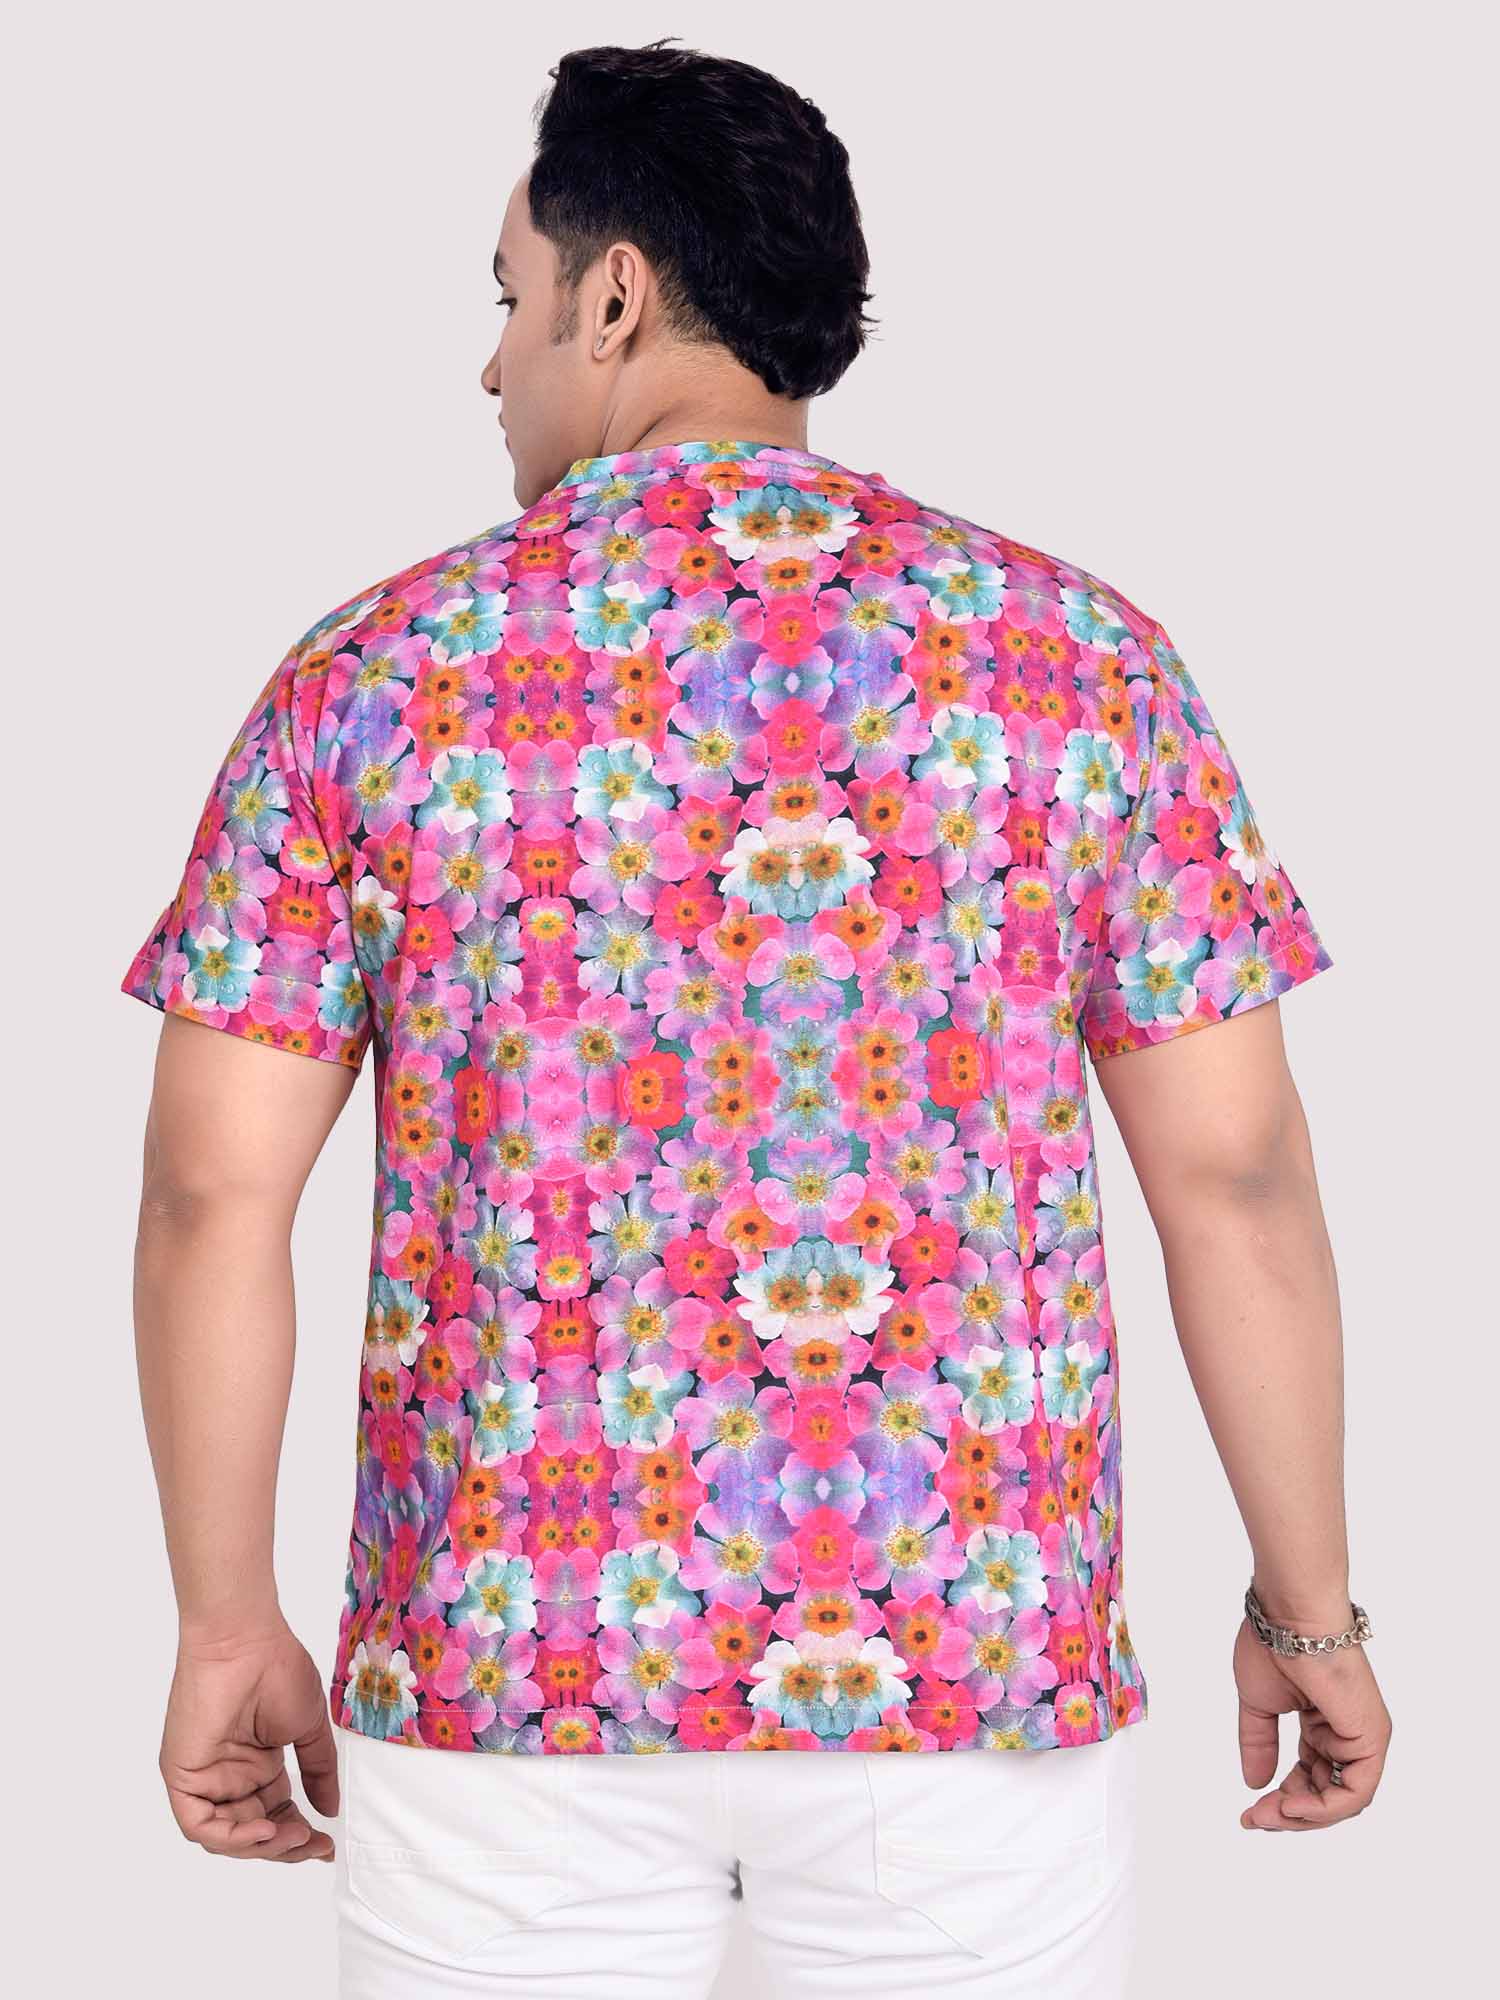 Daisy Flower Digital Printed Round Neck T-Shirt Men's Plus Size